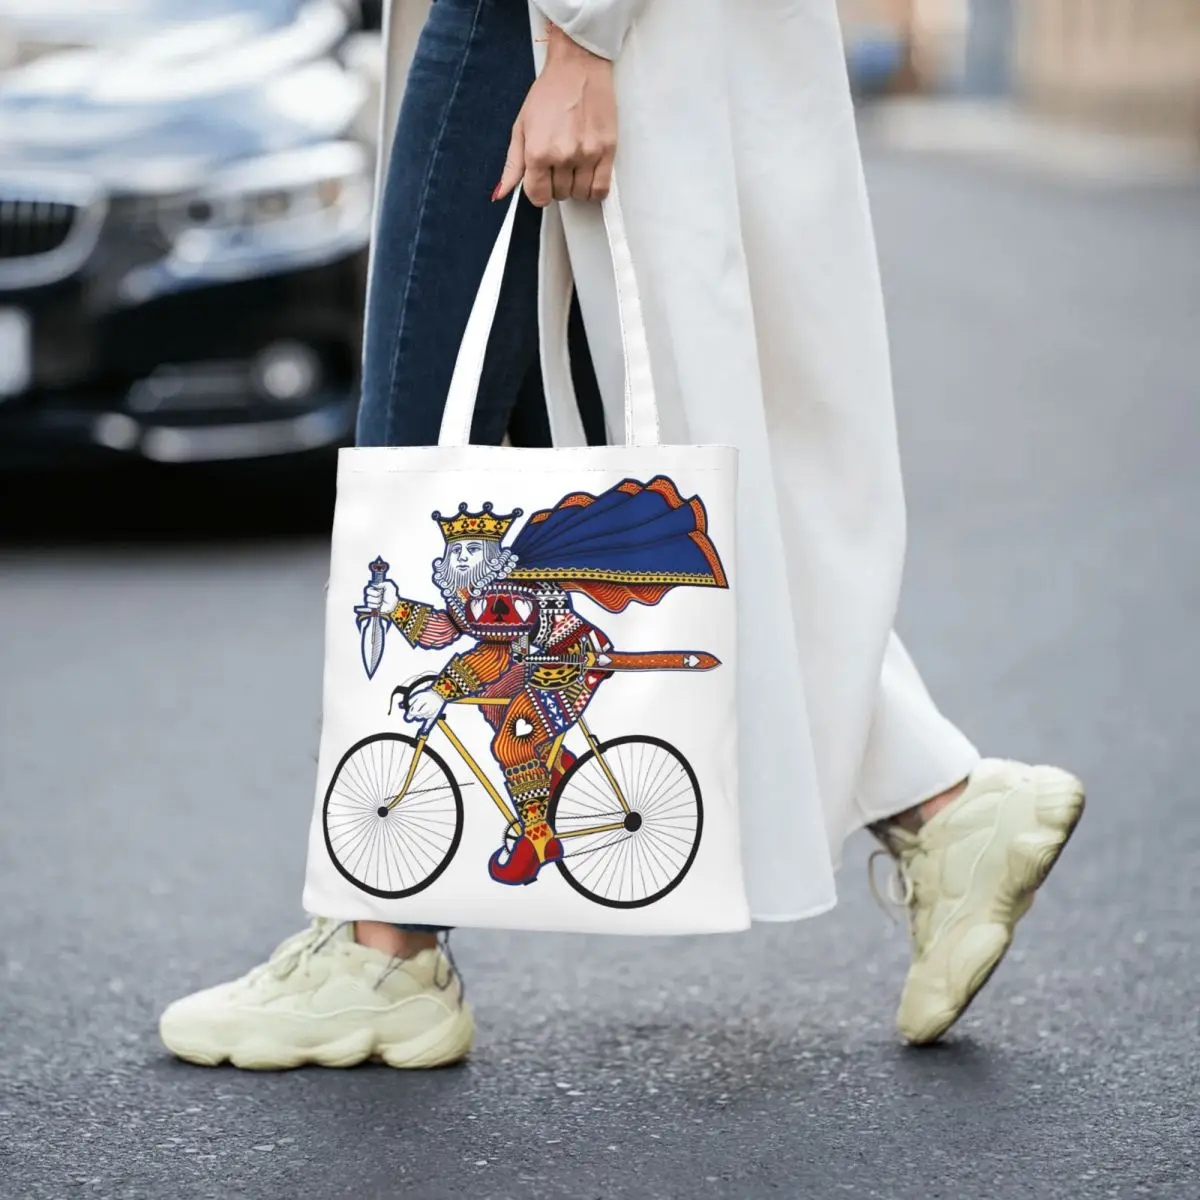 King Of Hearts Women Canvas Handbag Large Capacity Shopper Bag Tote Bag withSmall Shoulder Bag